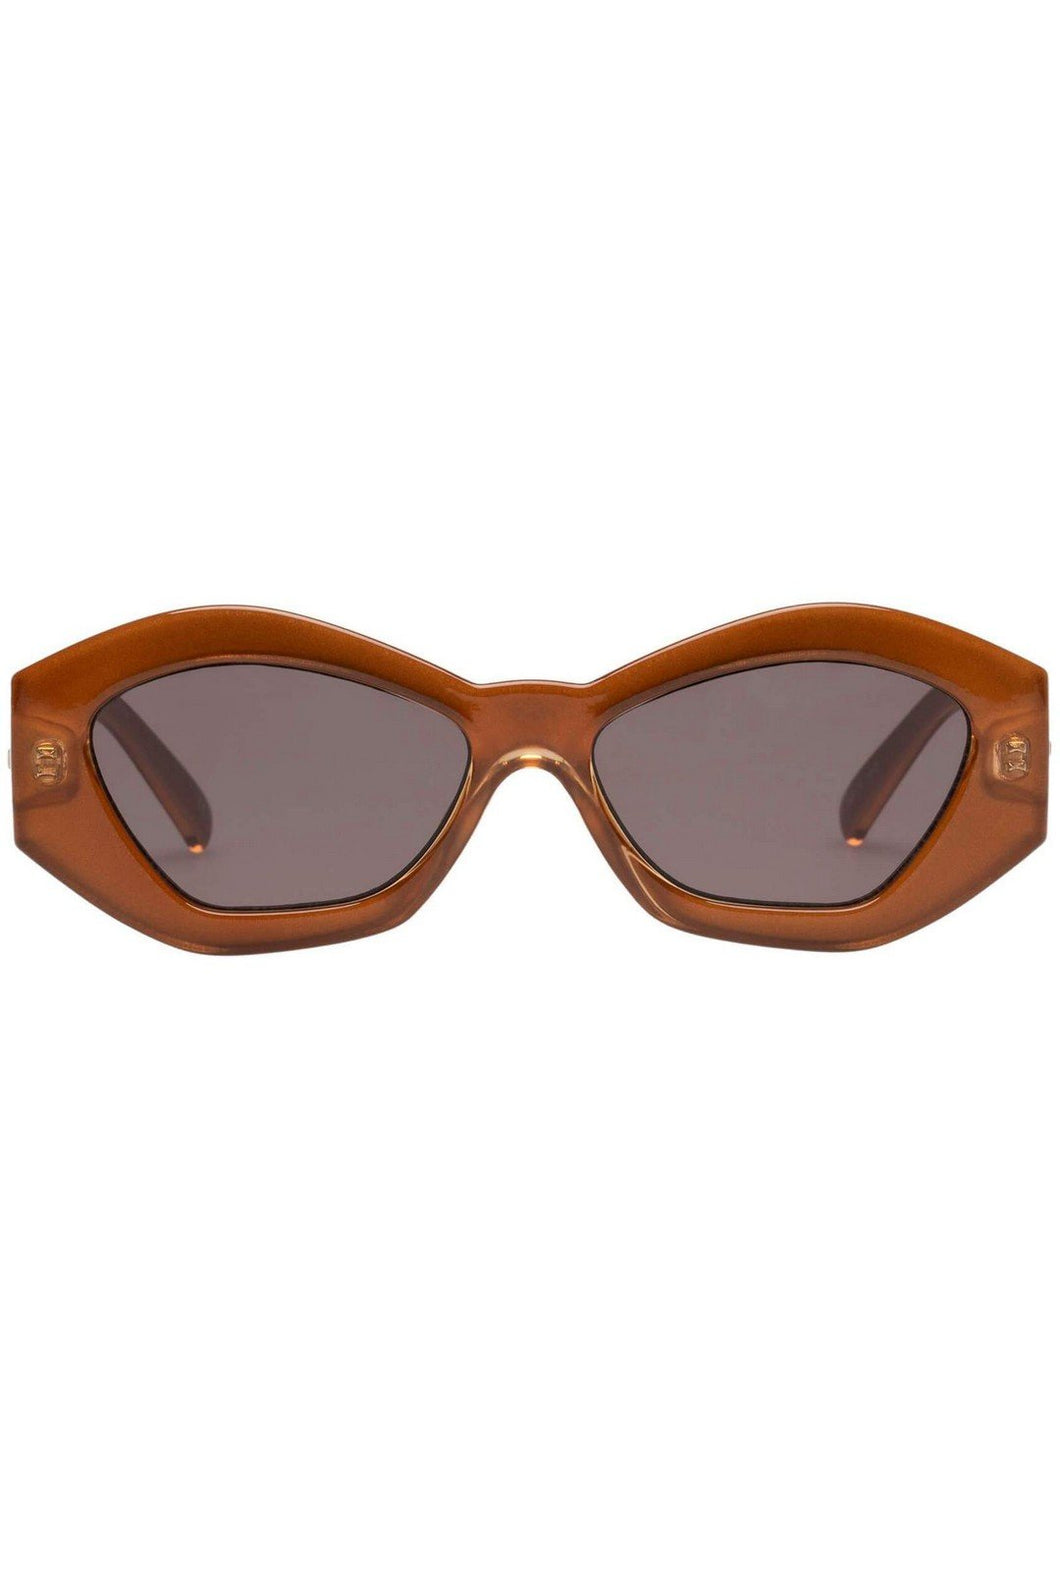 Le Specs - The Ginchiest sunglasses - Caramel